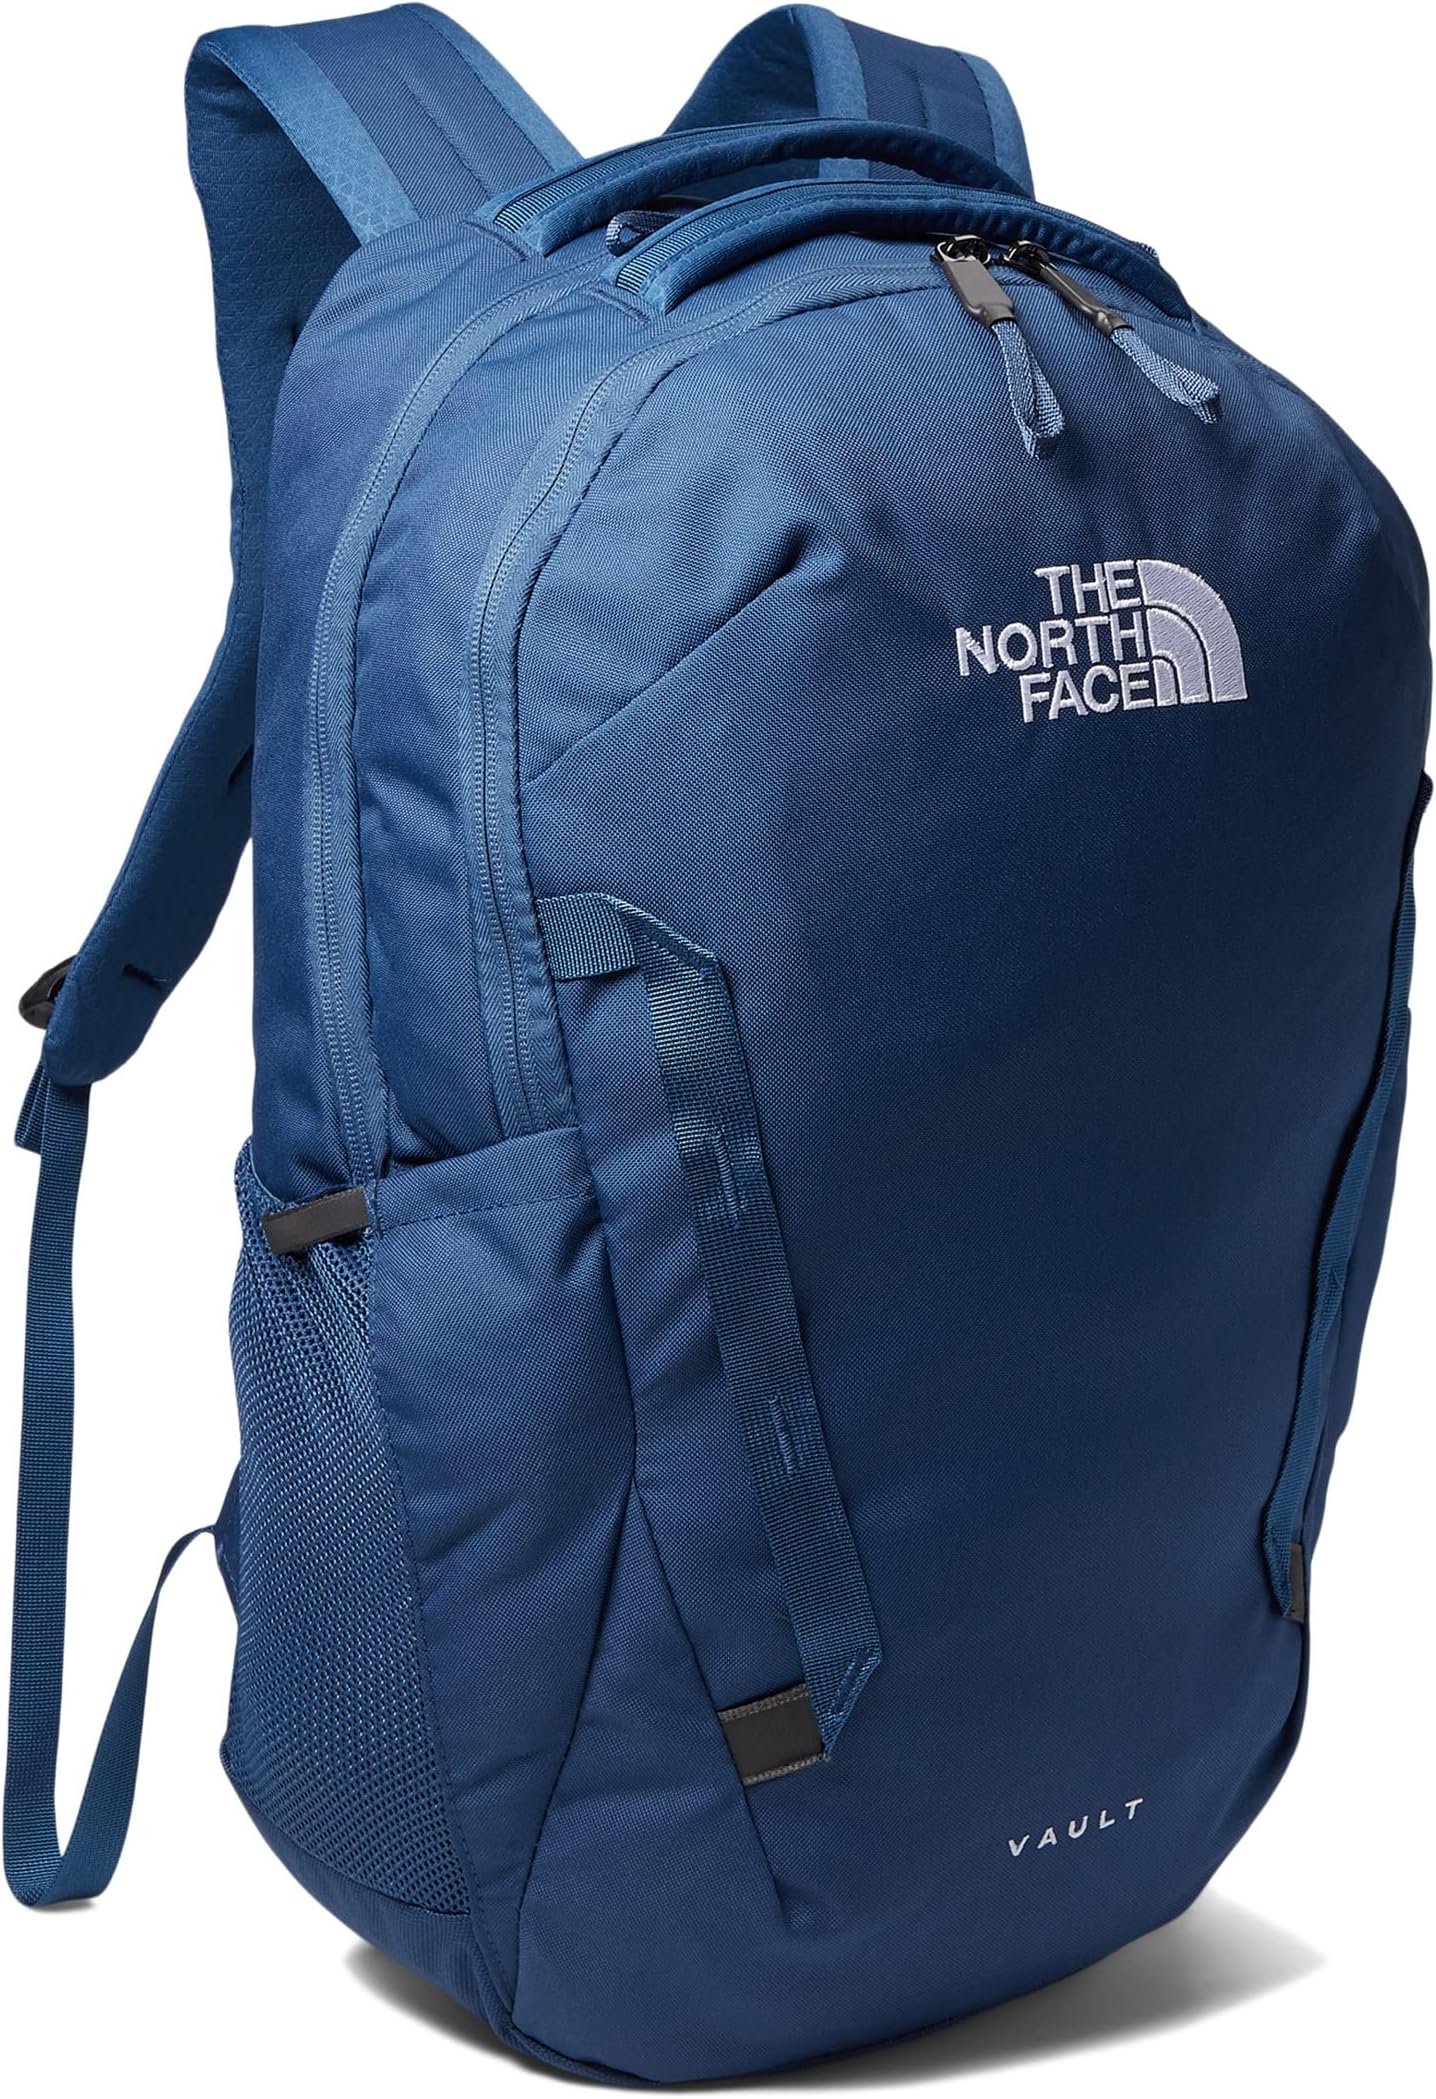 Рюкзак Vault Backpack The North Face, цвет Shady Blue/TNF White рюкзак women s surge the north face цвет shady blue tnf black